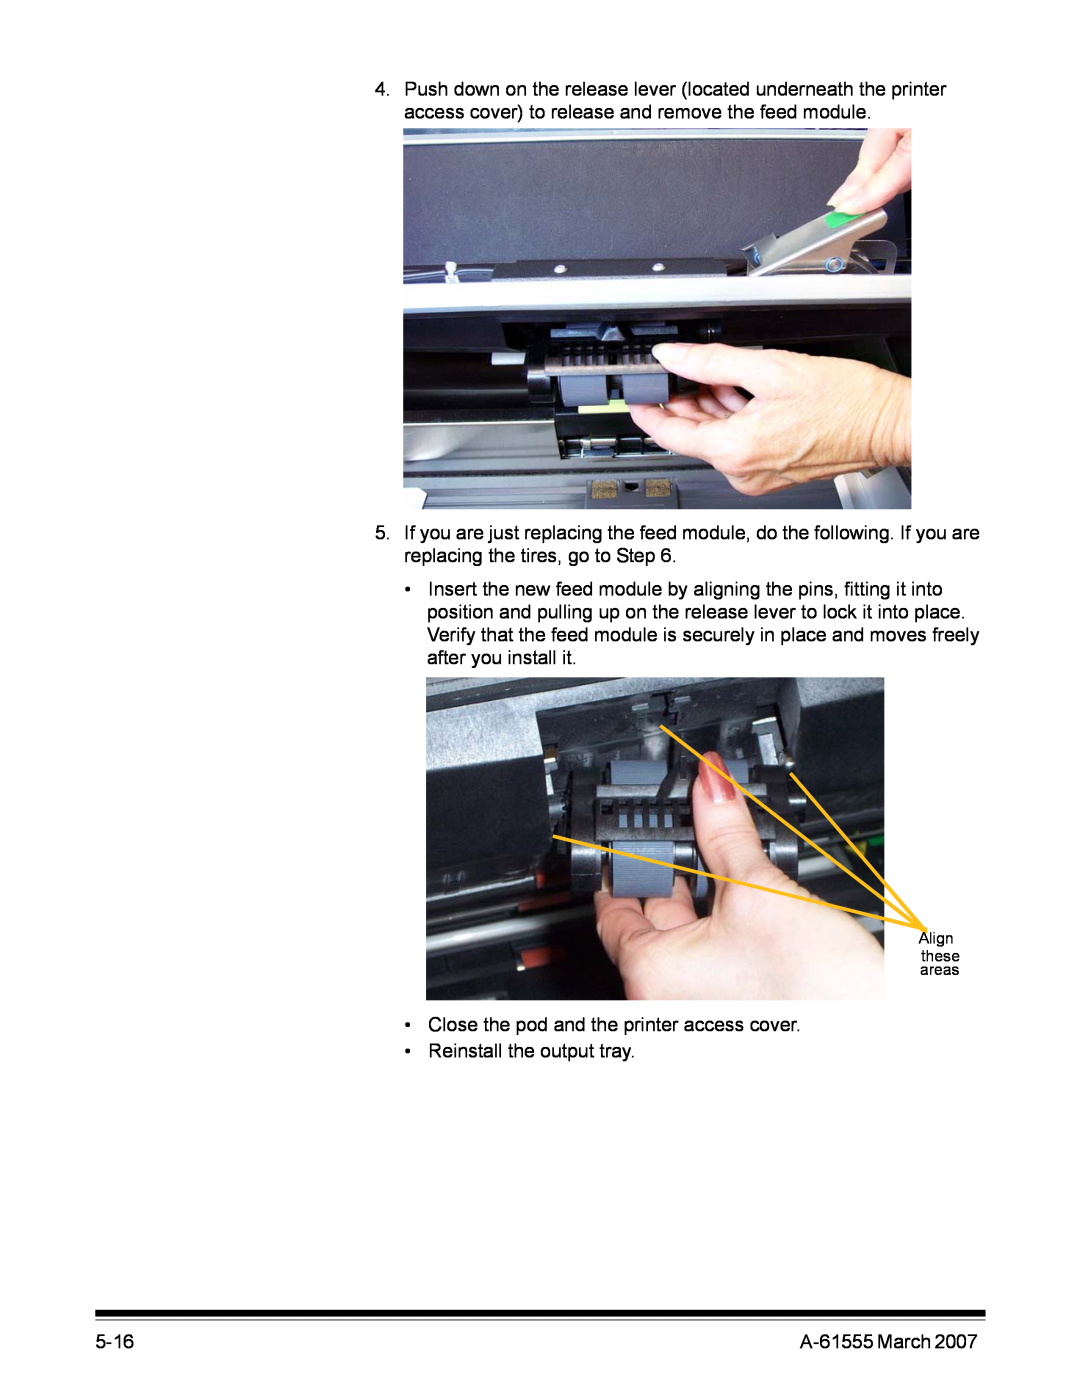 Kodak i1800 Series manual •Close the pod and the printer access cover 